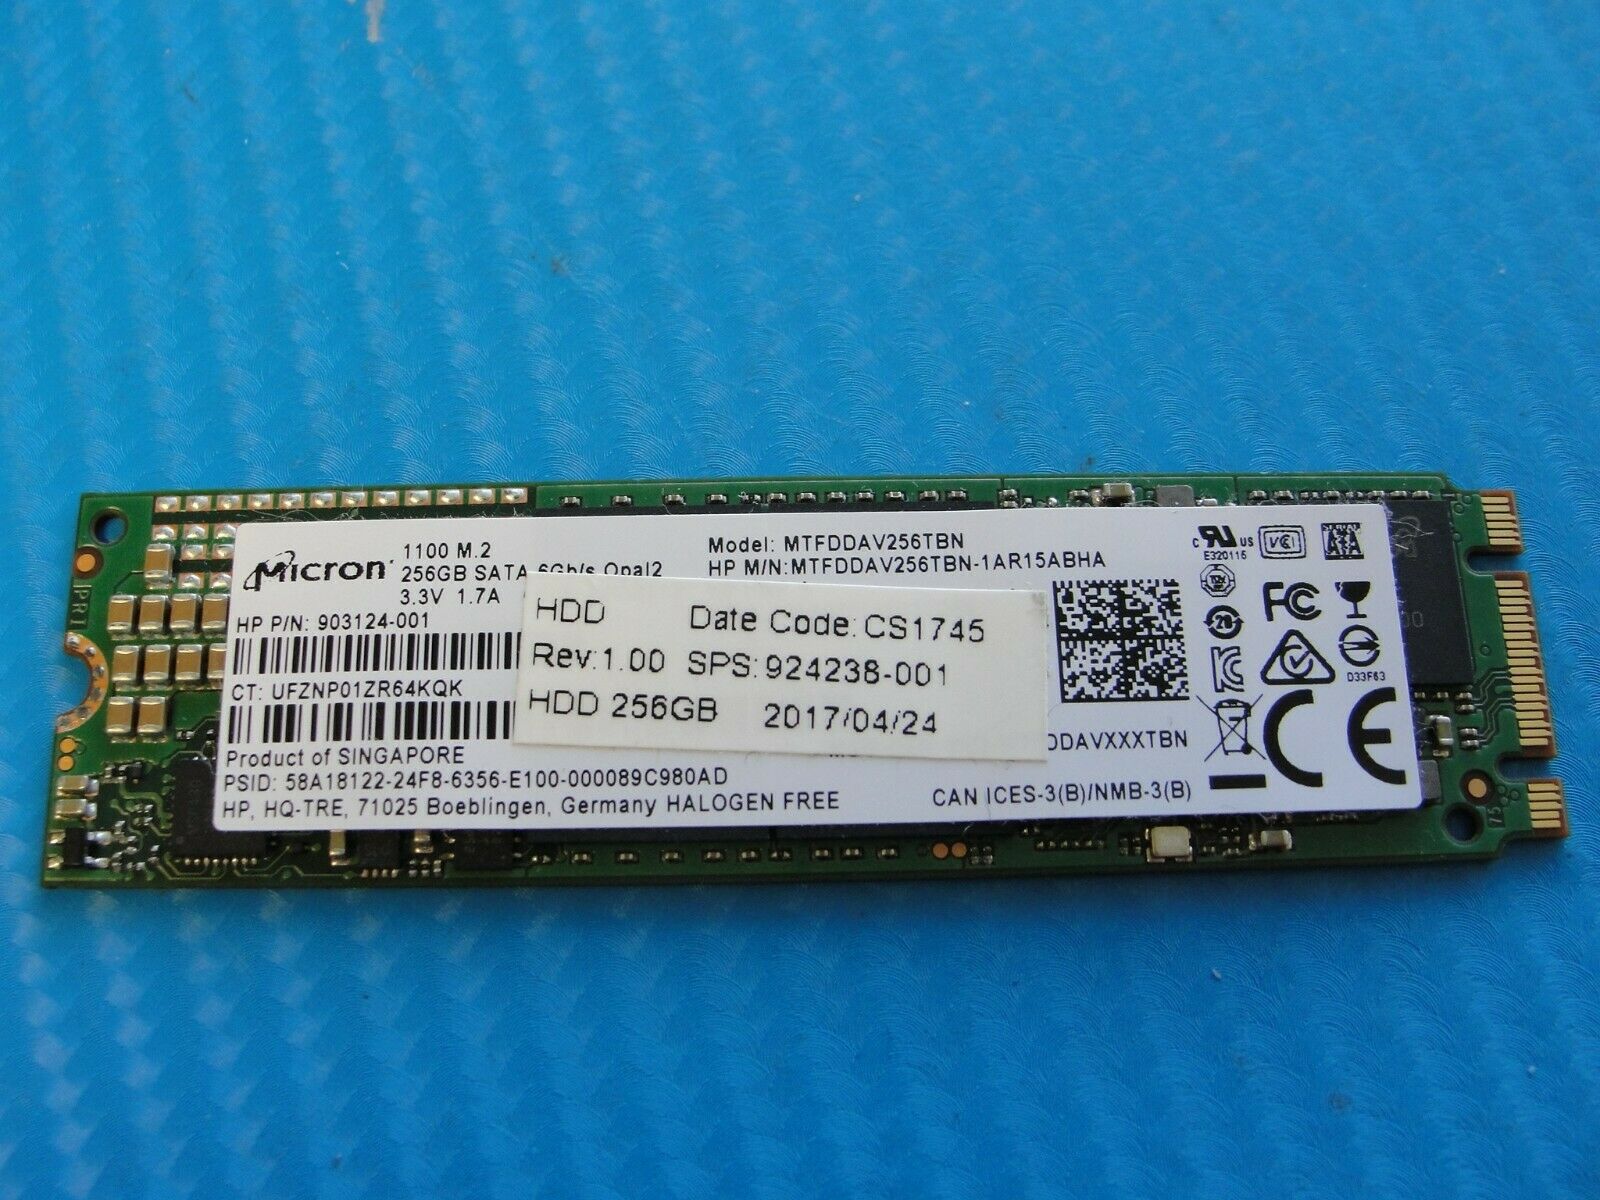 HP 256GB PN: 924238-001 Laptop HDD SSD Solid State Drive MICRON MTFDDAV256TBN 